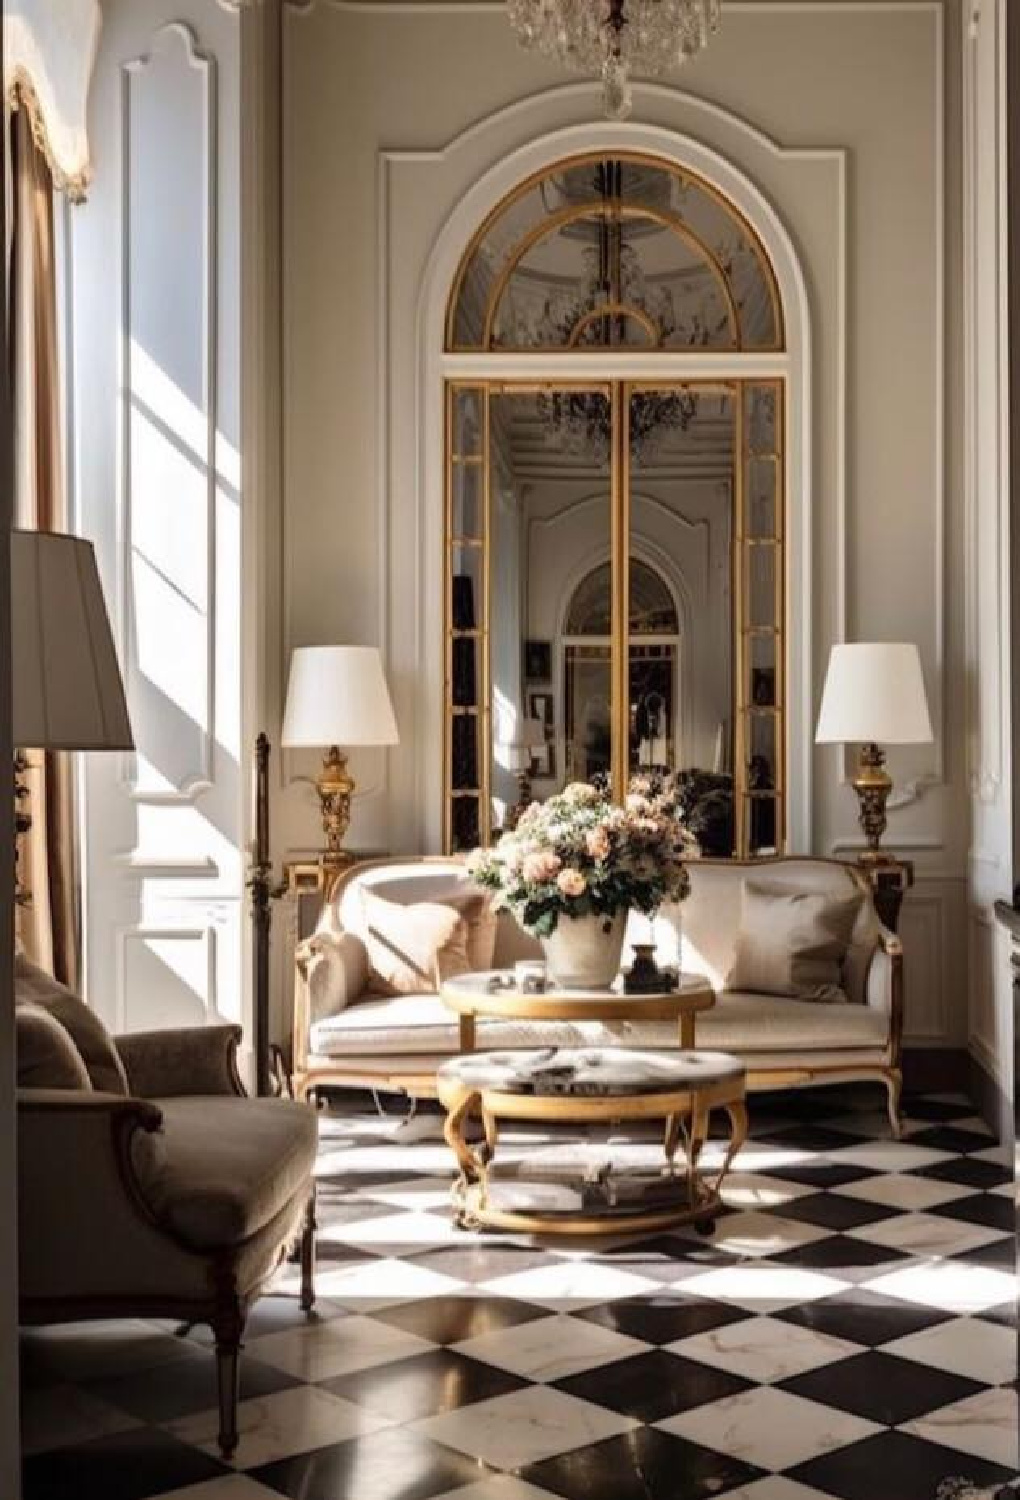 Elegant living room with checkered marble floor and European style design - via @chateauderon (AI design). #checkeredfloors #timelessdesign